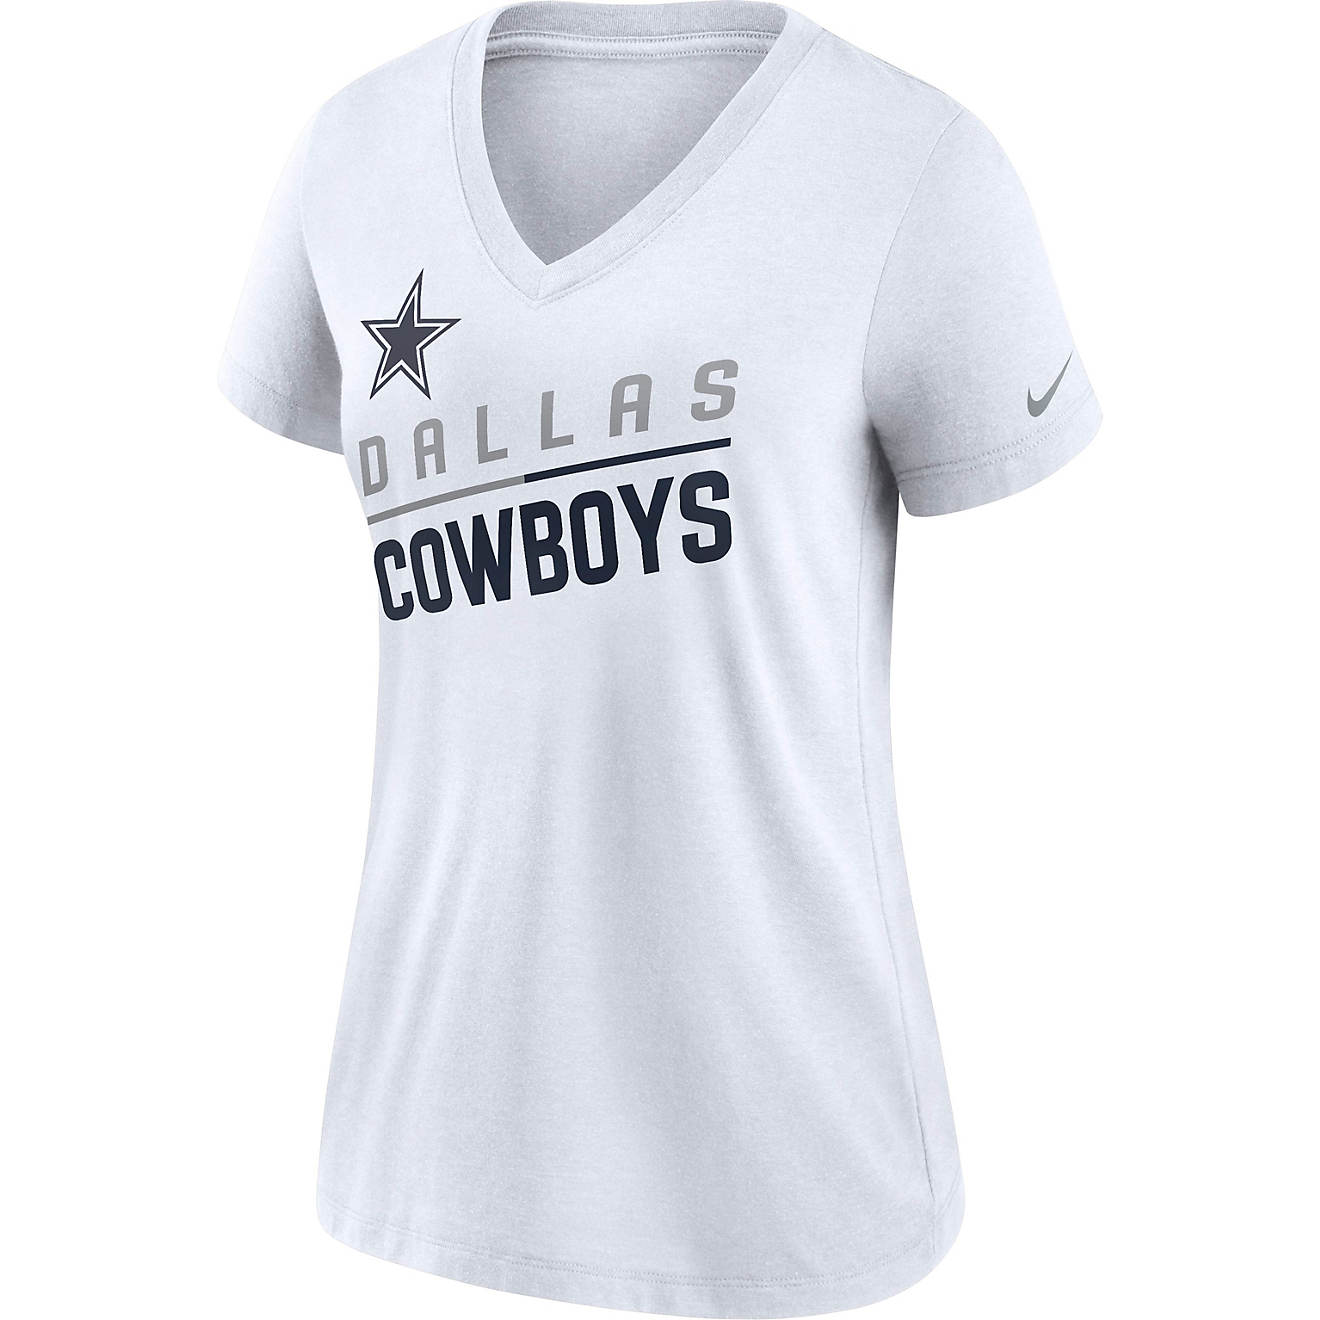 Nike Women's Dallas Cowboys Slant Team Triblend V-Neck T-shirt